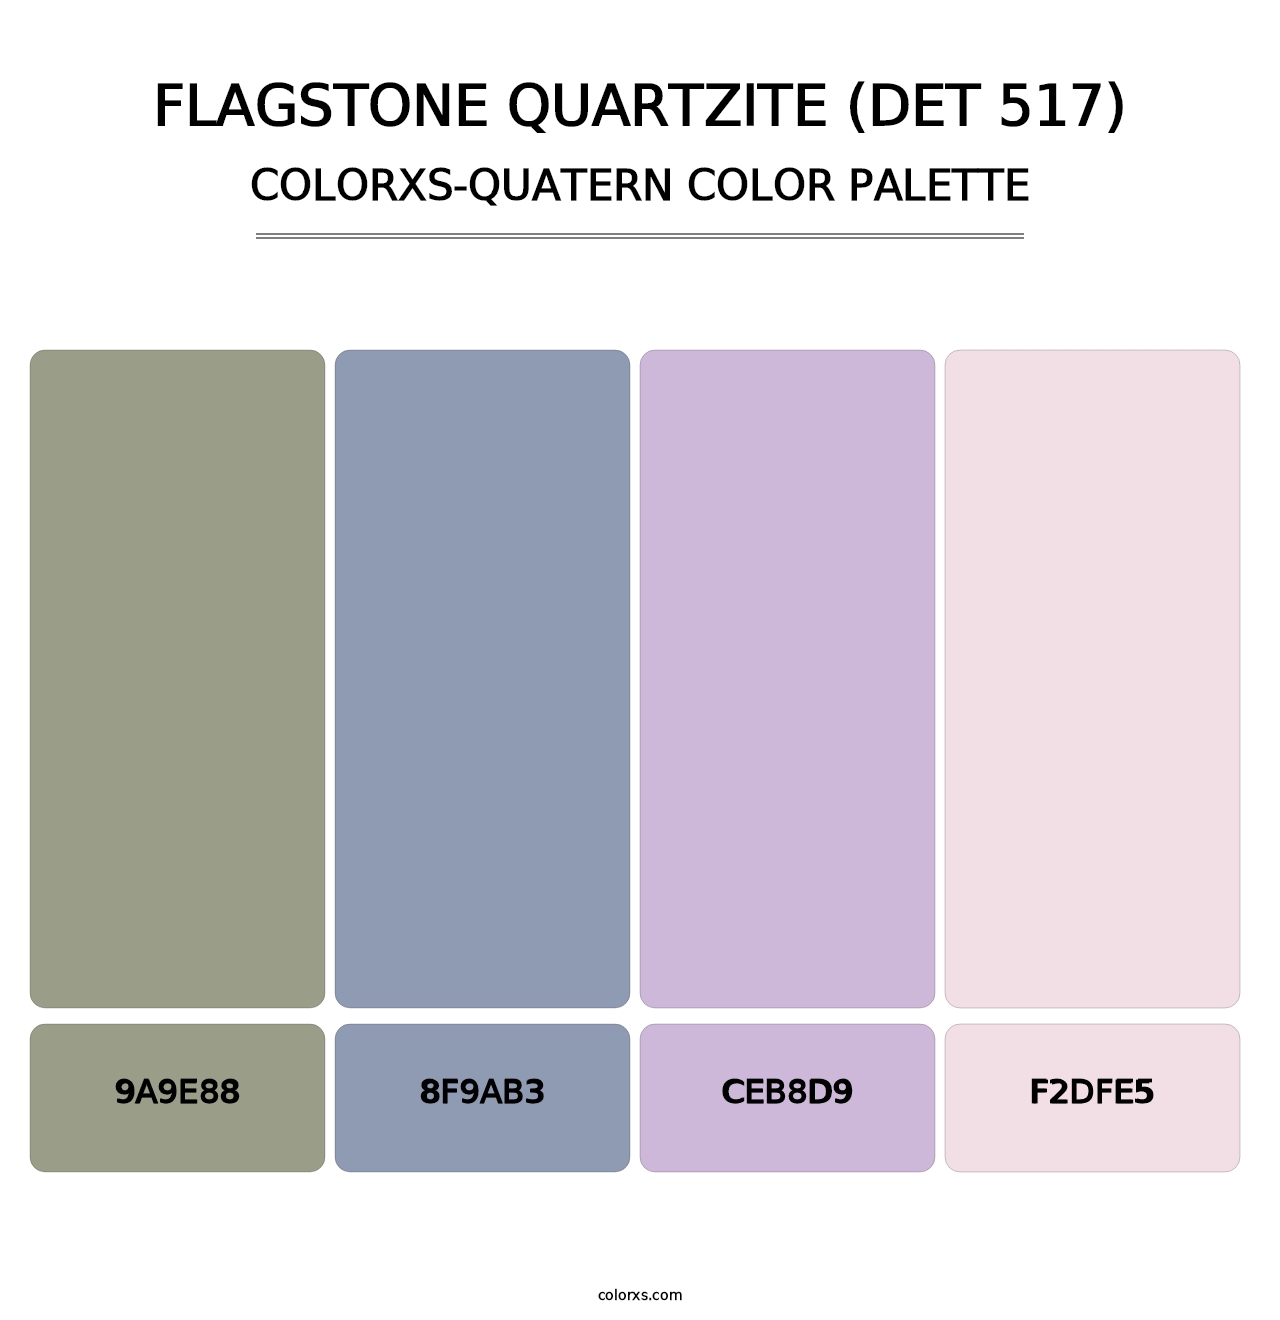 Flagstone Quartzite (DET 517) - Colorxs Quatern Palette